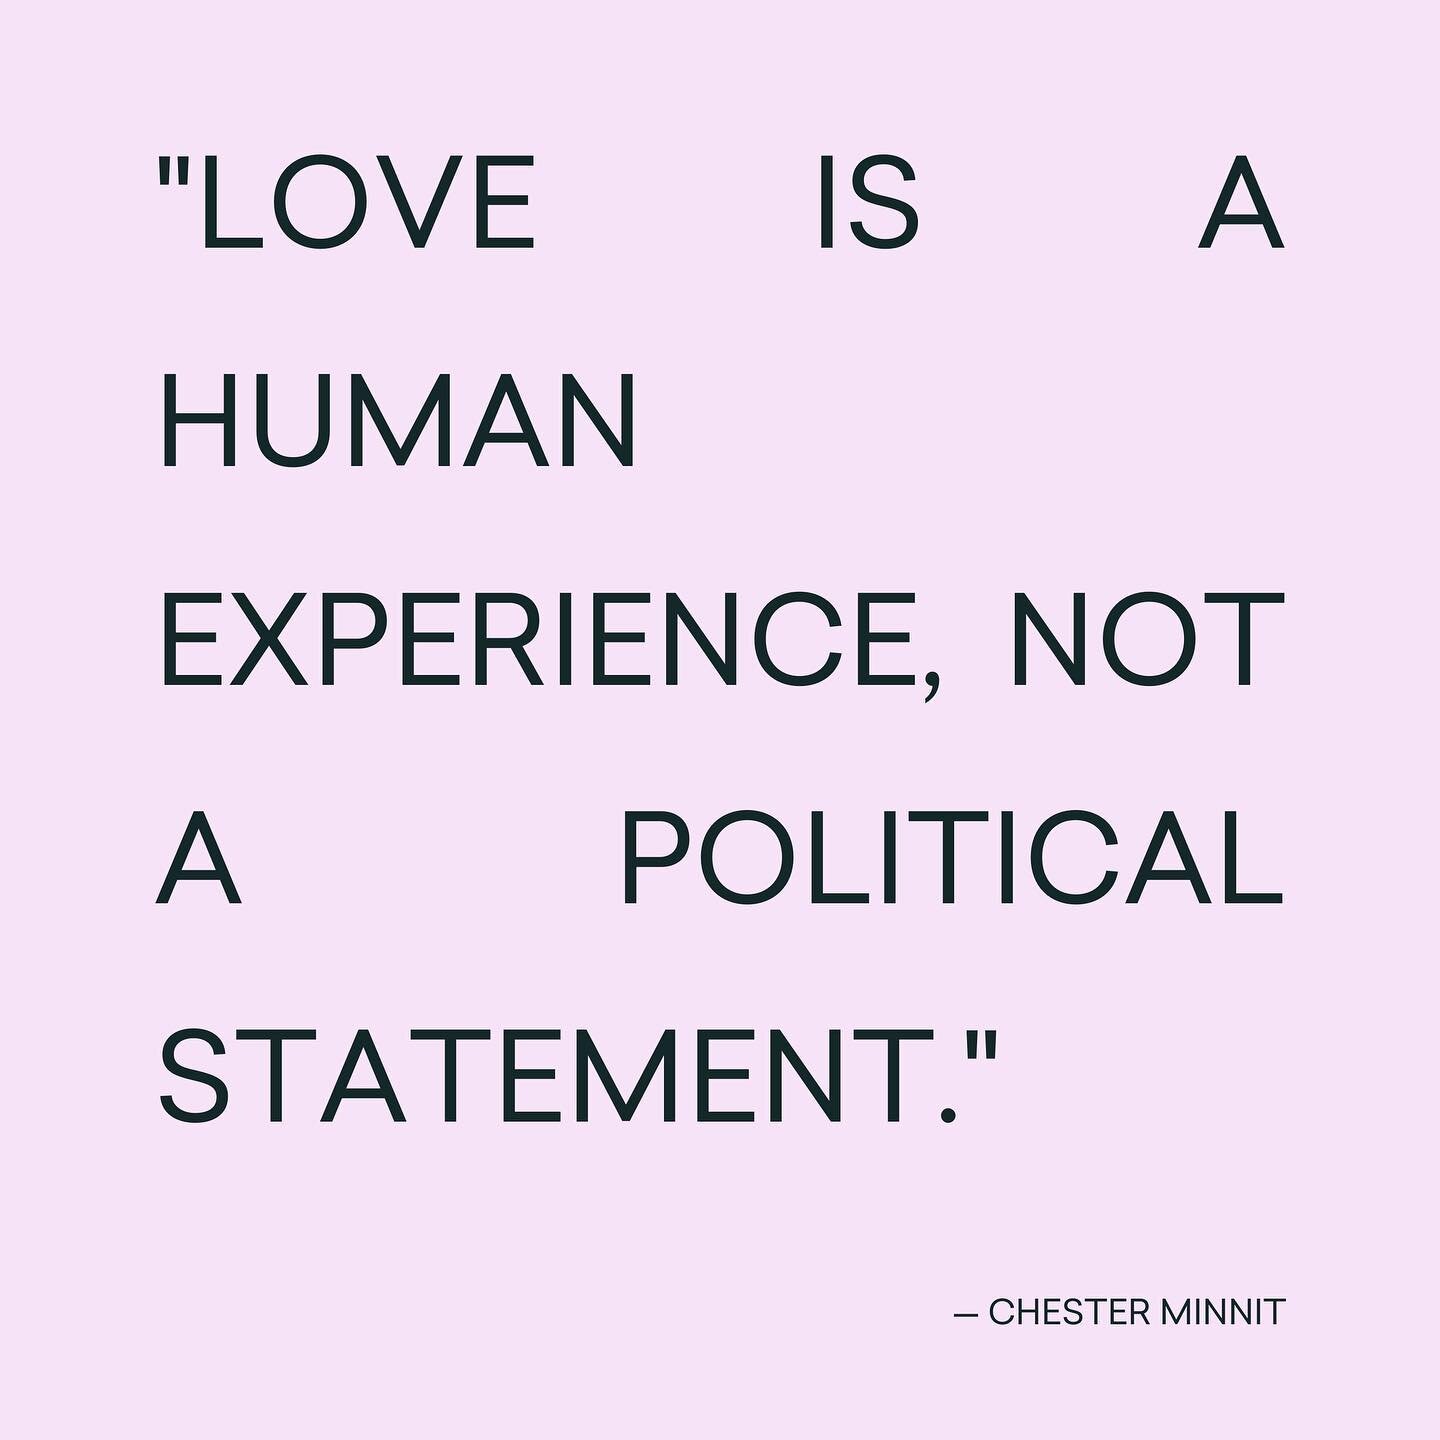 Keep loving who you wanna love 💗🌈🫶

//

#lgbtqpride #queerpride #loveislove #transisbeautiful #lgbtcommunity #spreadkindness